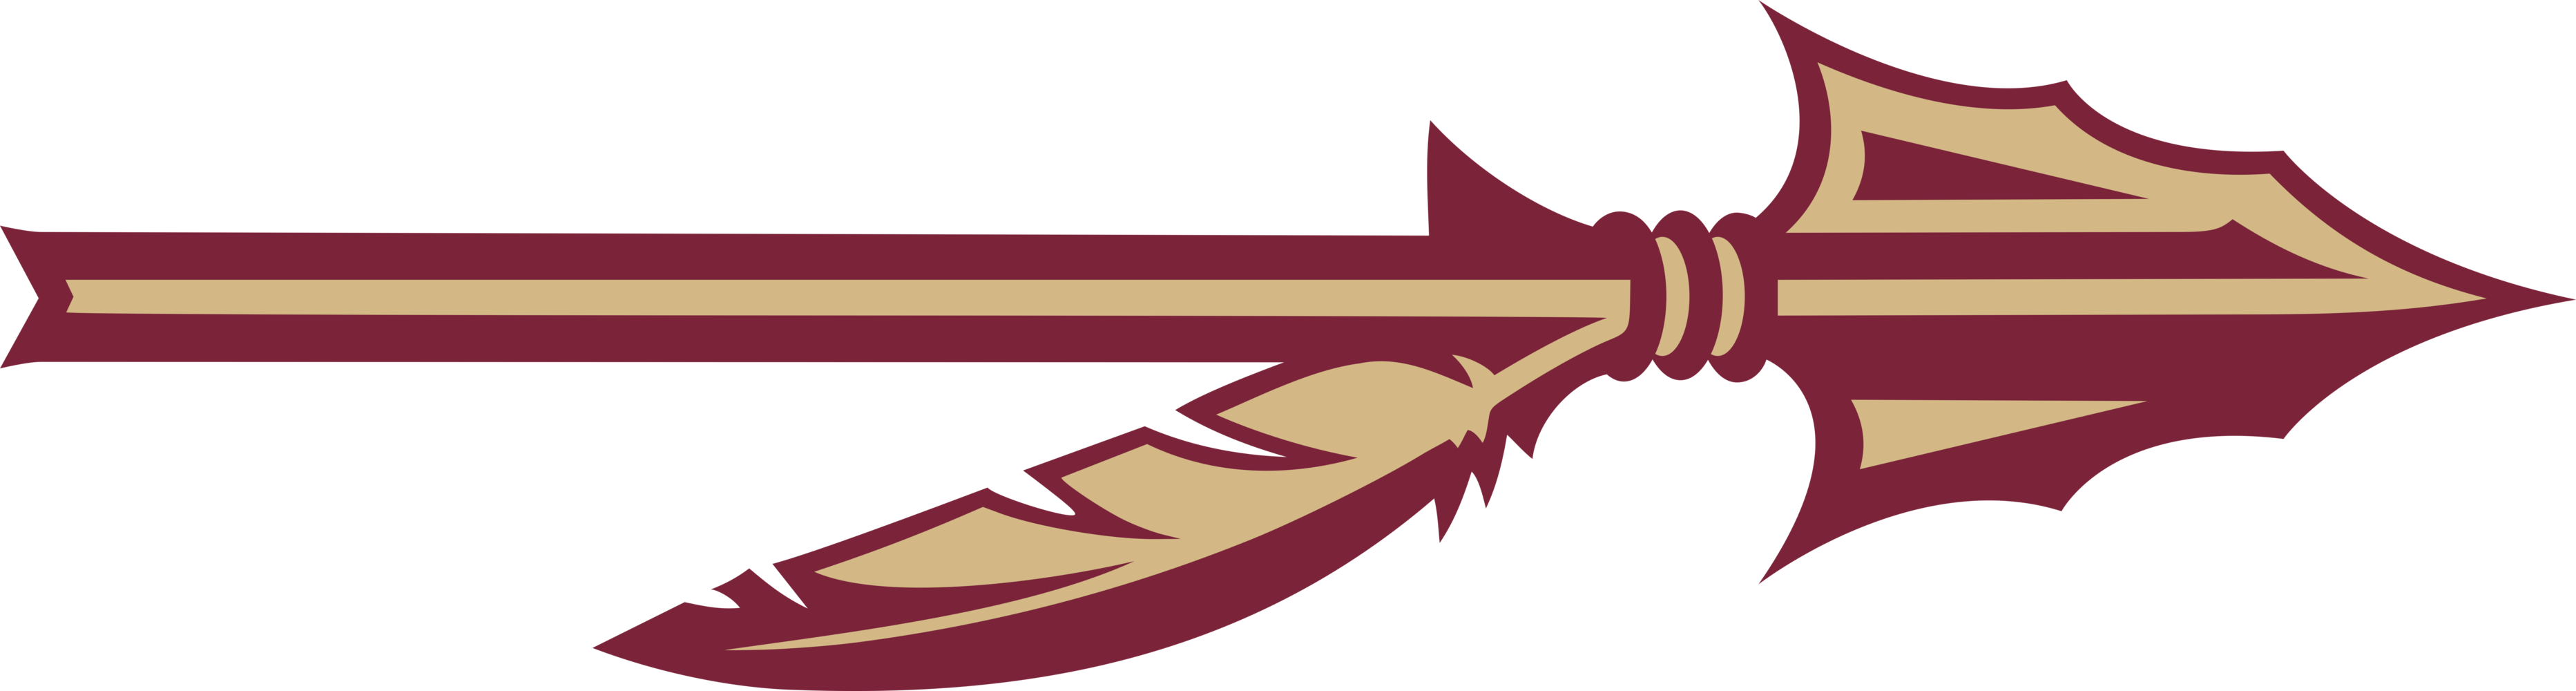 Florida State Arrow Logo - Florida State Seminoles. Team Logos. Florida state seminoles